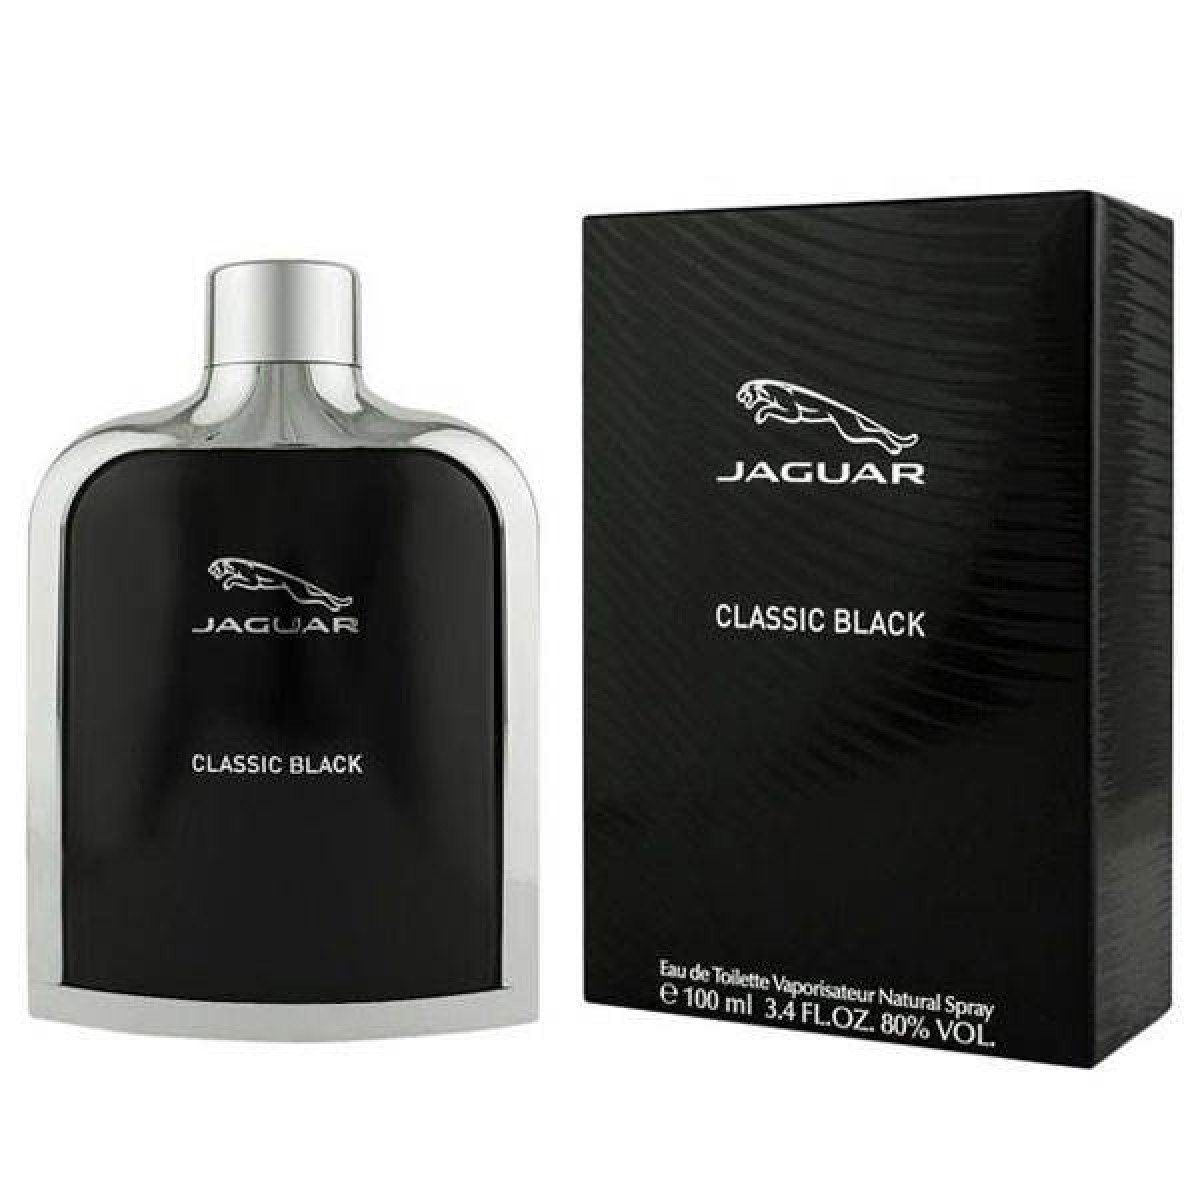 ادو تویلت مردانه جگوار مدل Jaguar Classic Black حجم 100 میلی لیتر